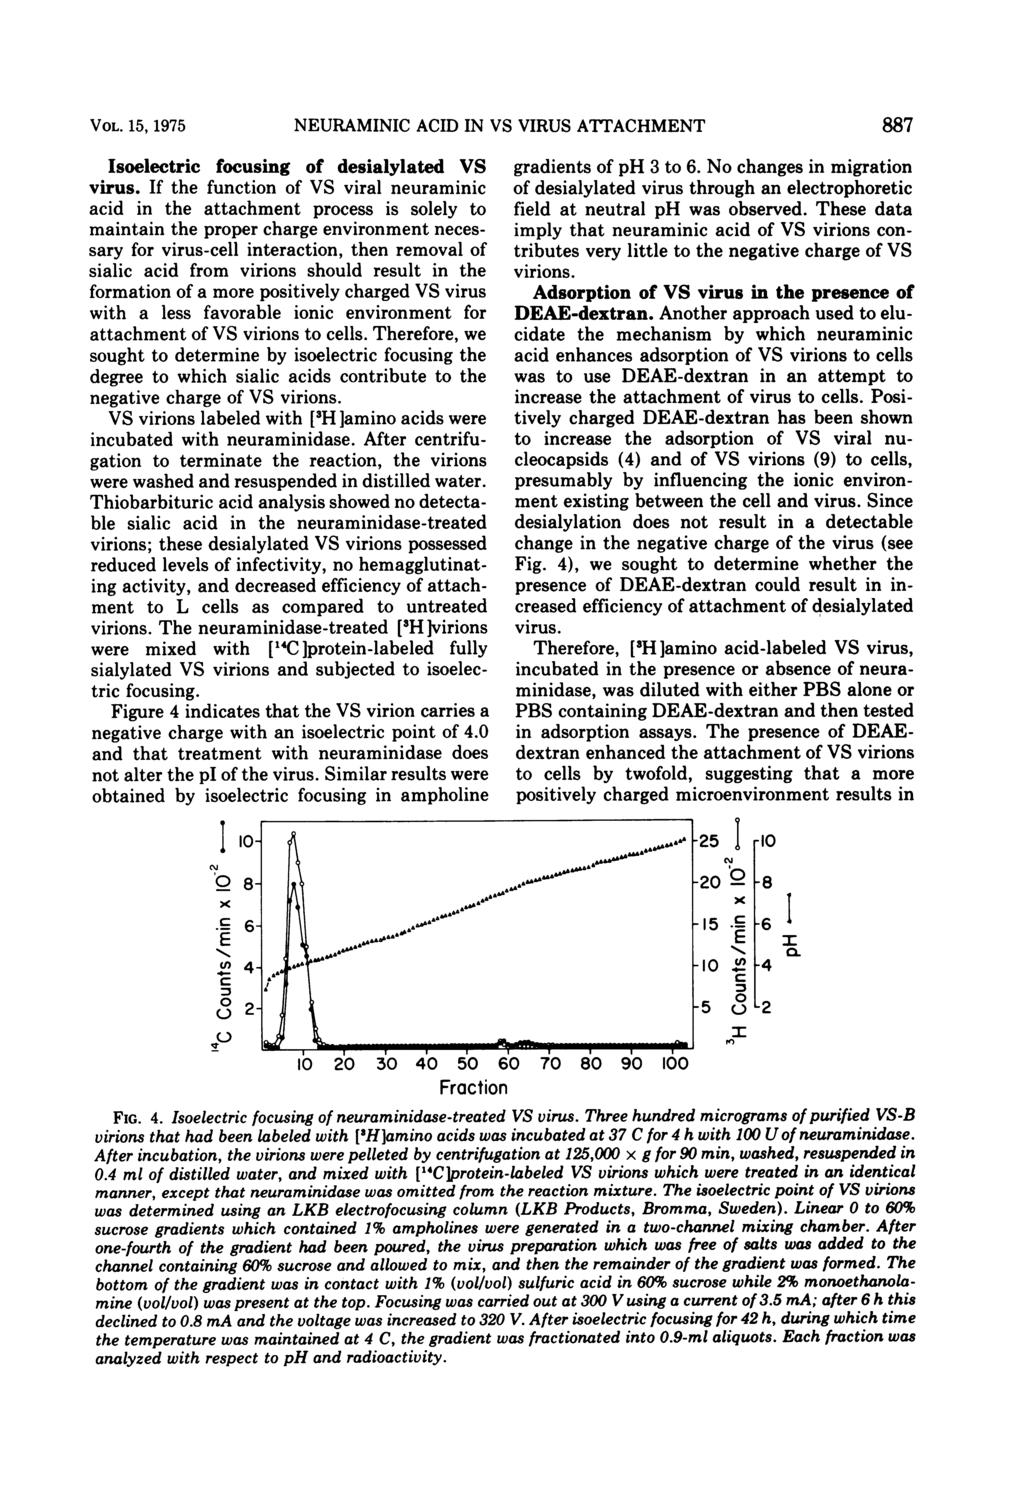 VOL. 15, 1975 Isoelectric focusing of desialylated VS virus.